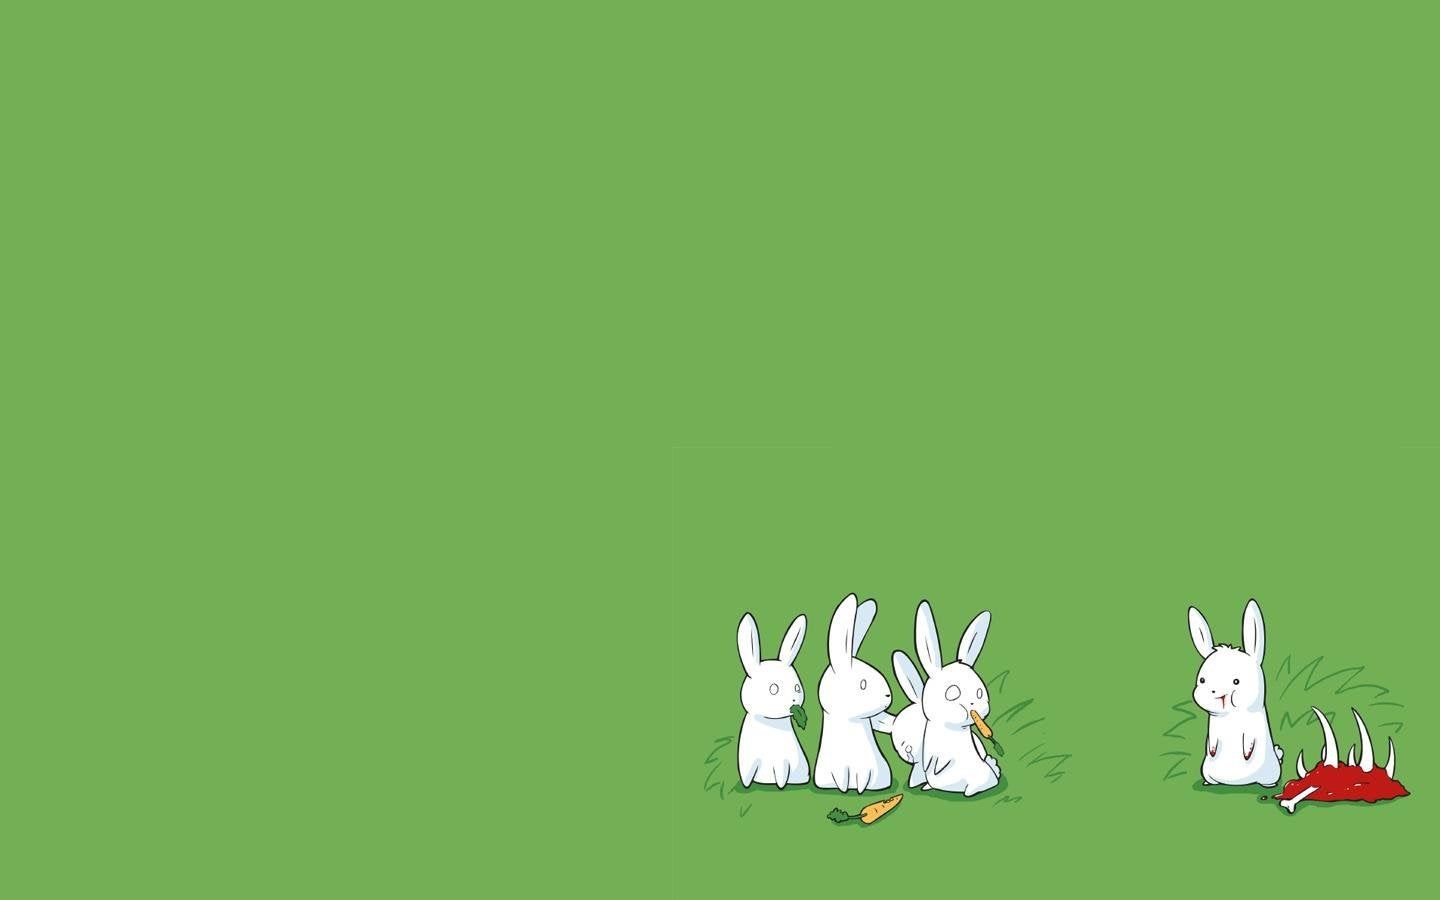 1920x1080 px green background wallpaper animals rabbits wallpapers animals rabbits backgrounds - 1440x900